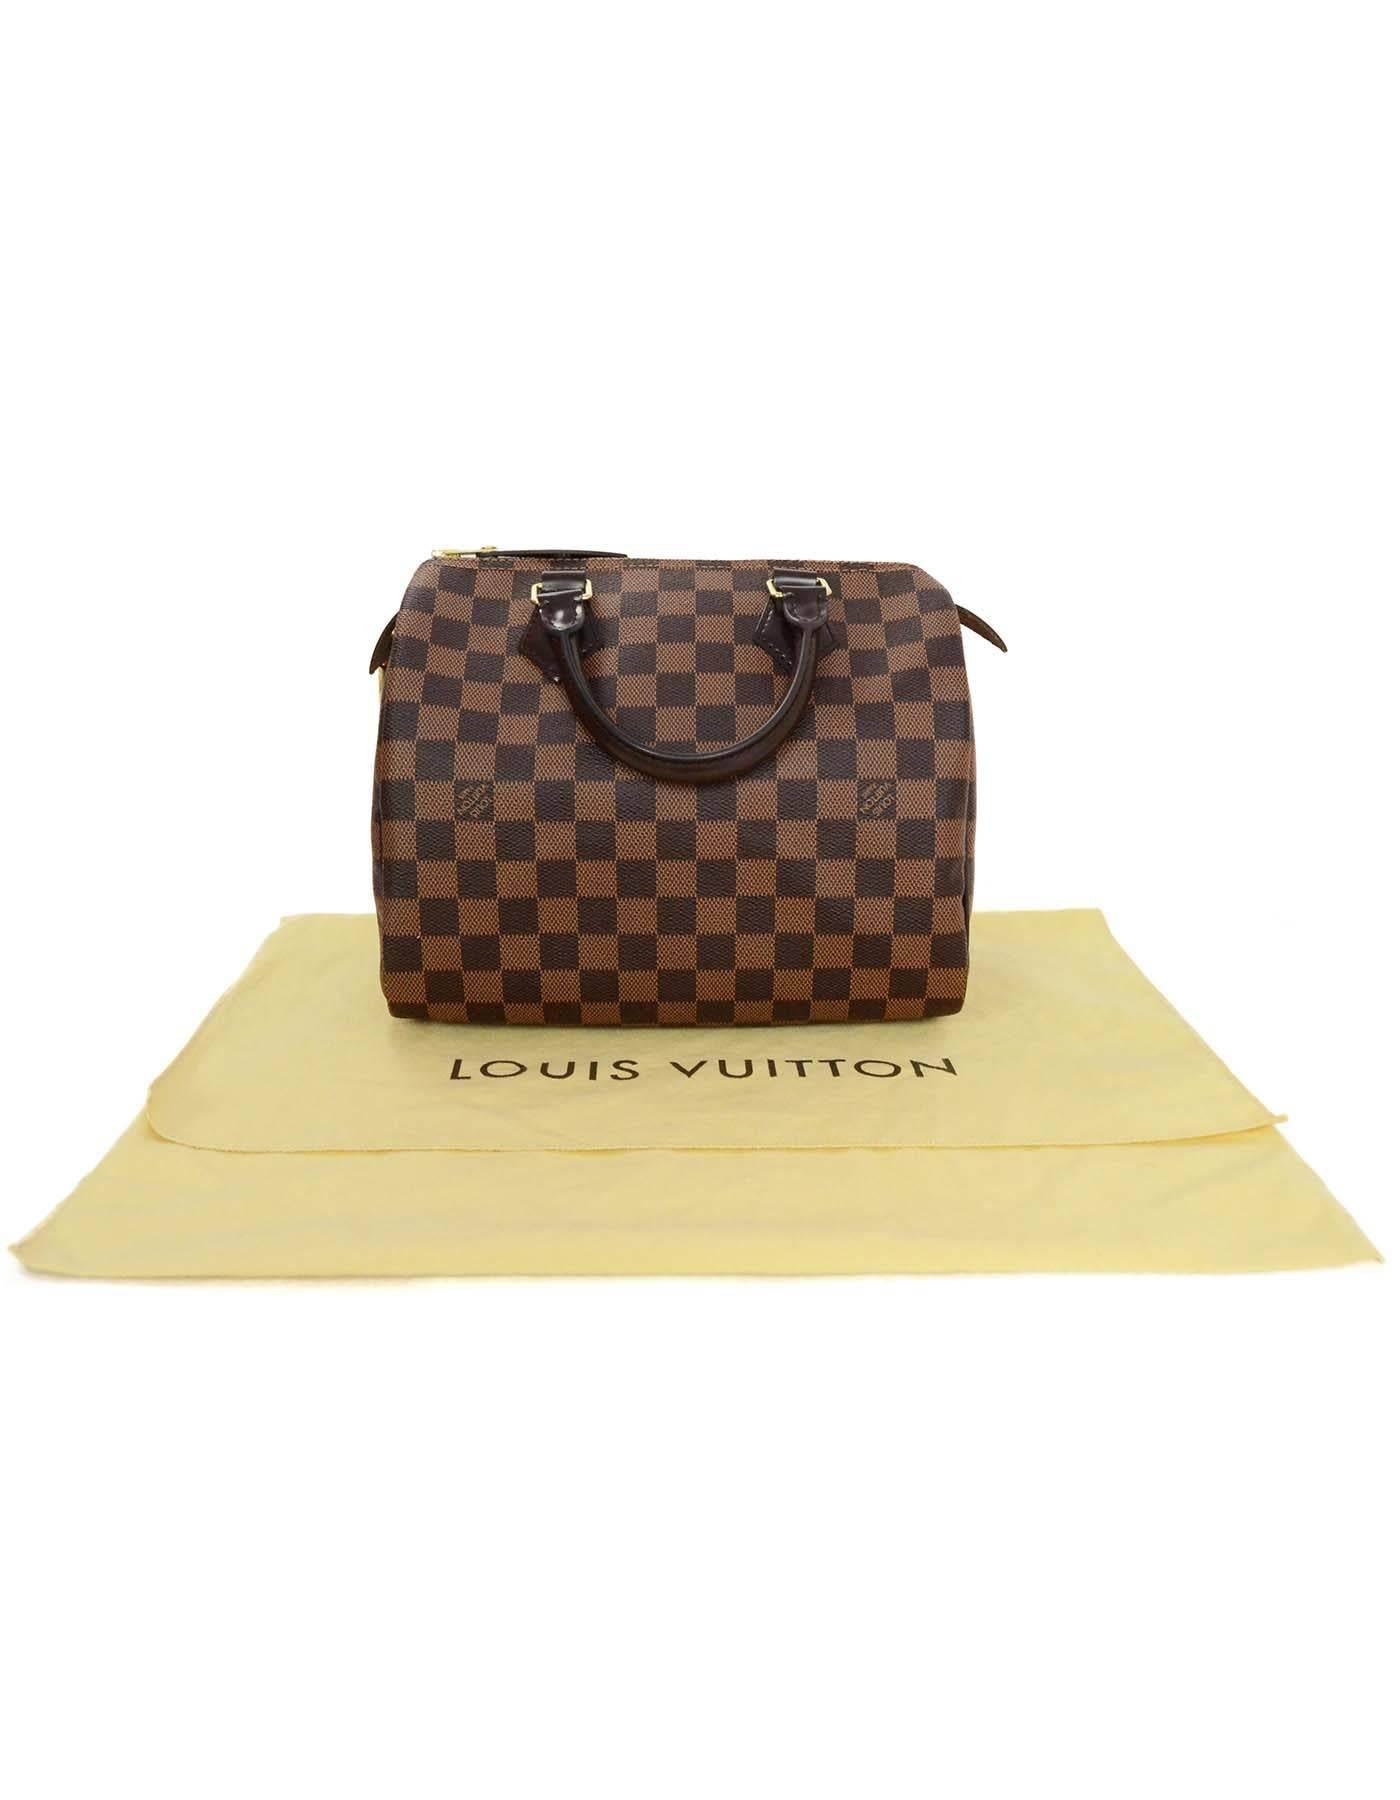 Louis Vuitton Like New Brown Damier Ebene Speedy 25 Bag 6